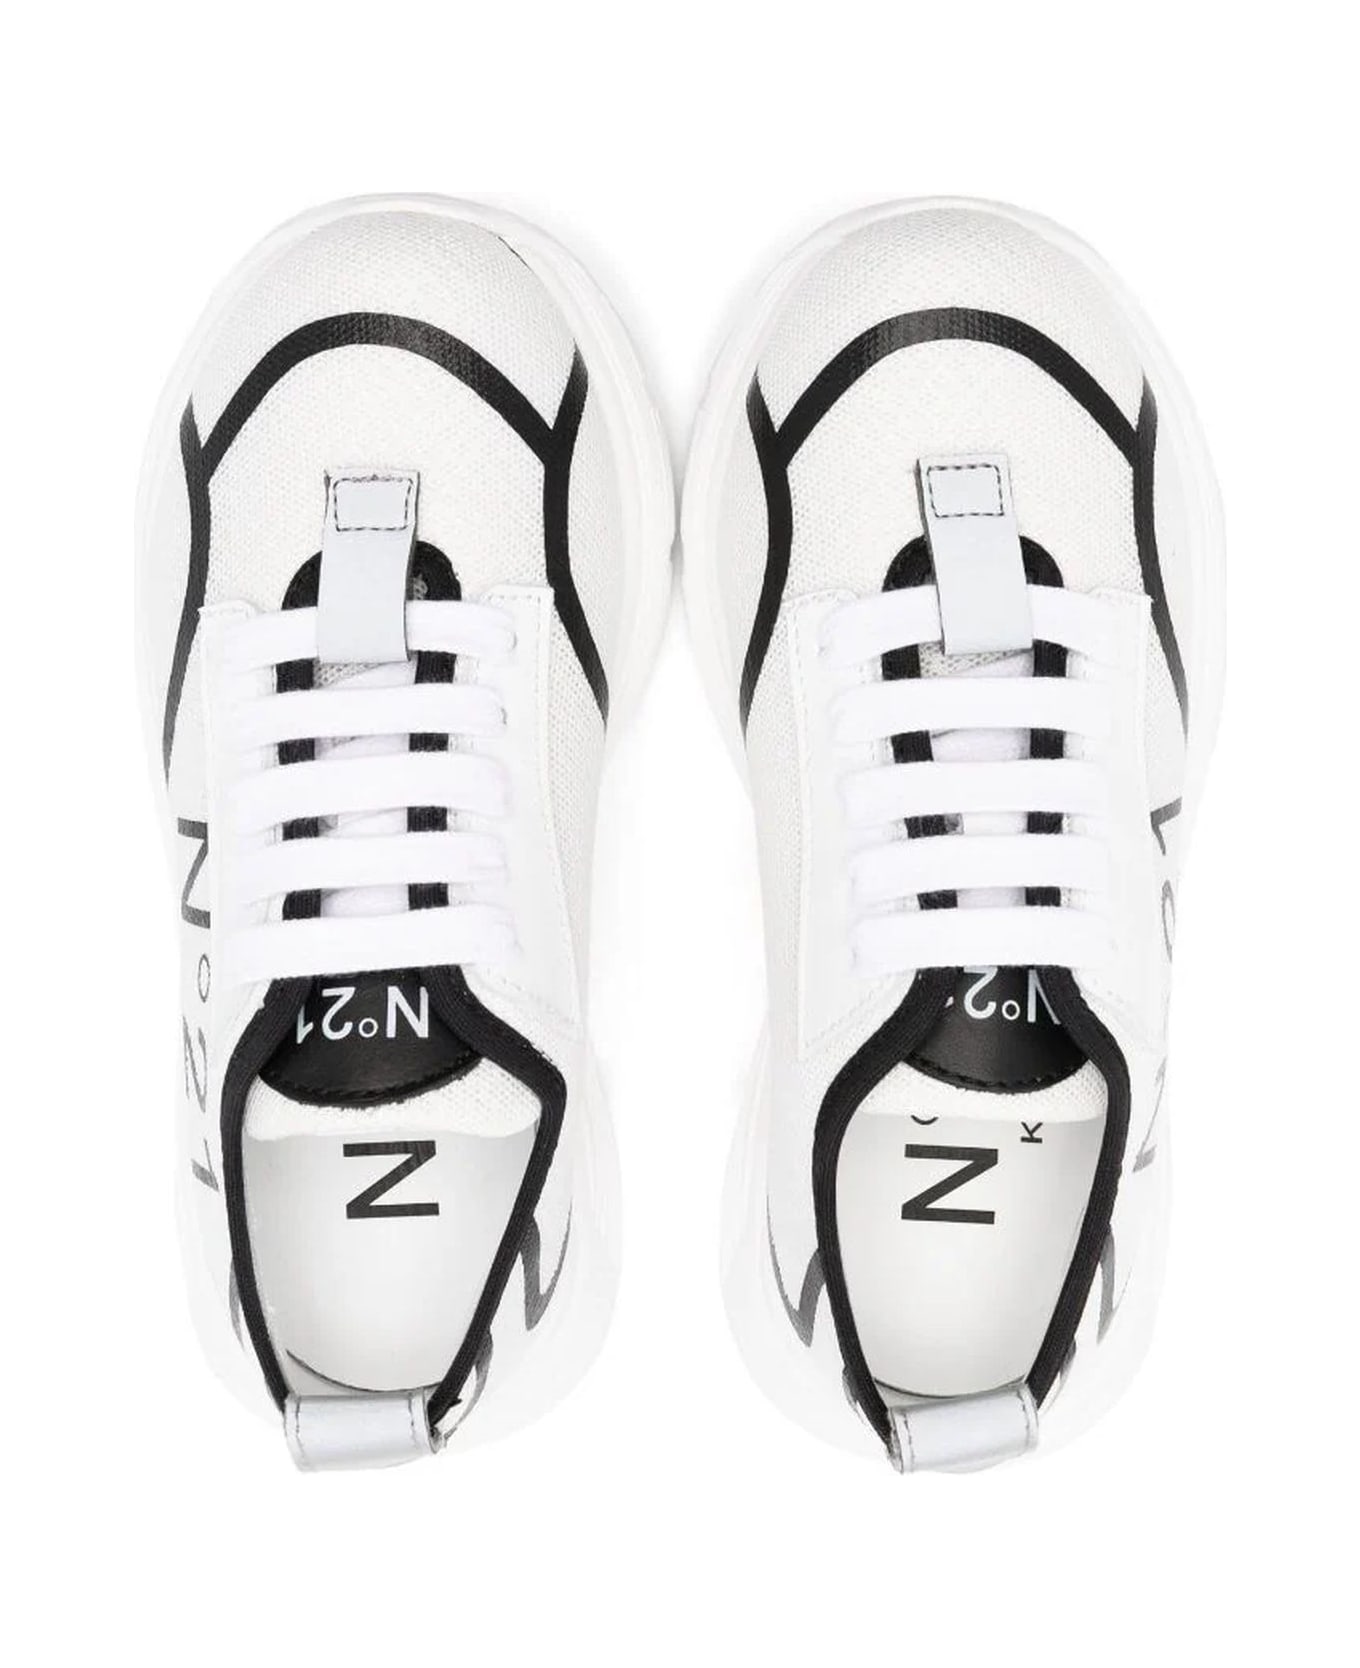 N.21 N°21 Sneakers White - White シューズ